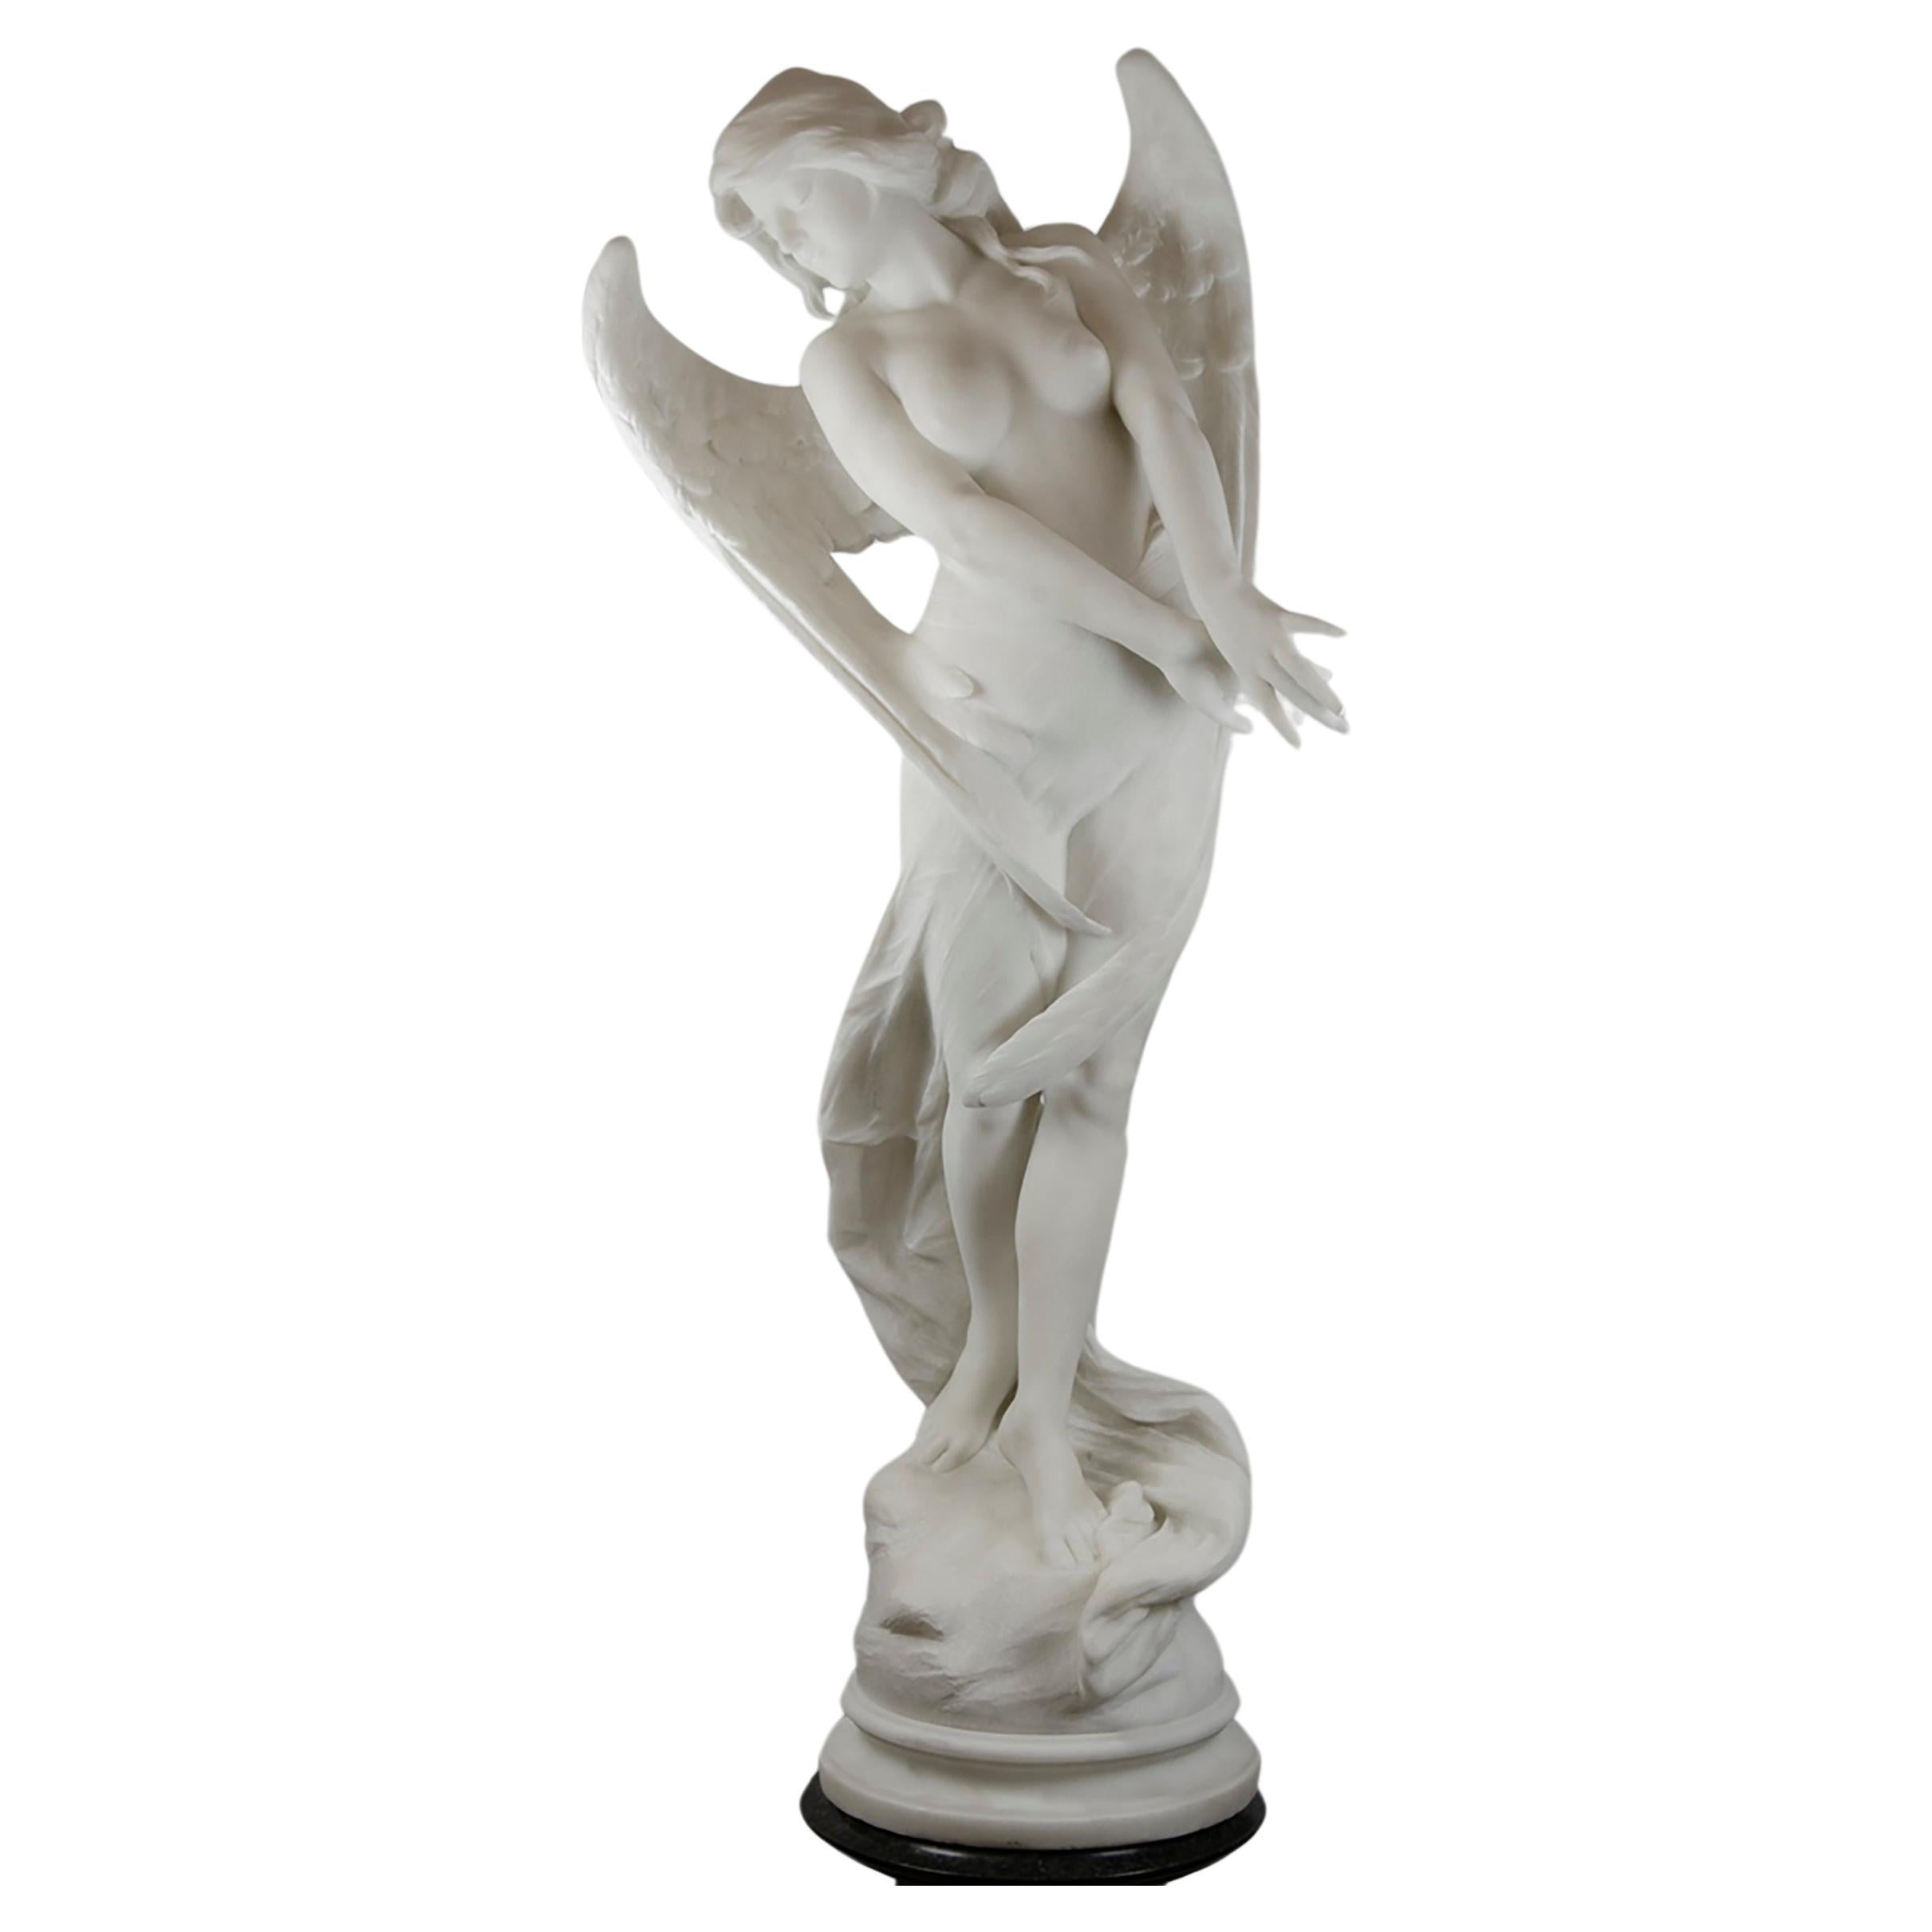 Italian, 1858–1941 Carrara Marble Sculpture "Un Angelo" by Emilio Fiaschi For Sale